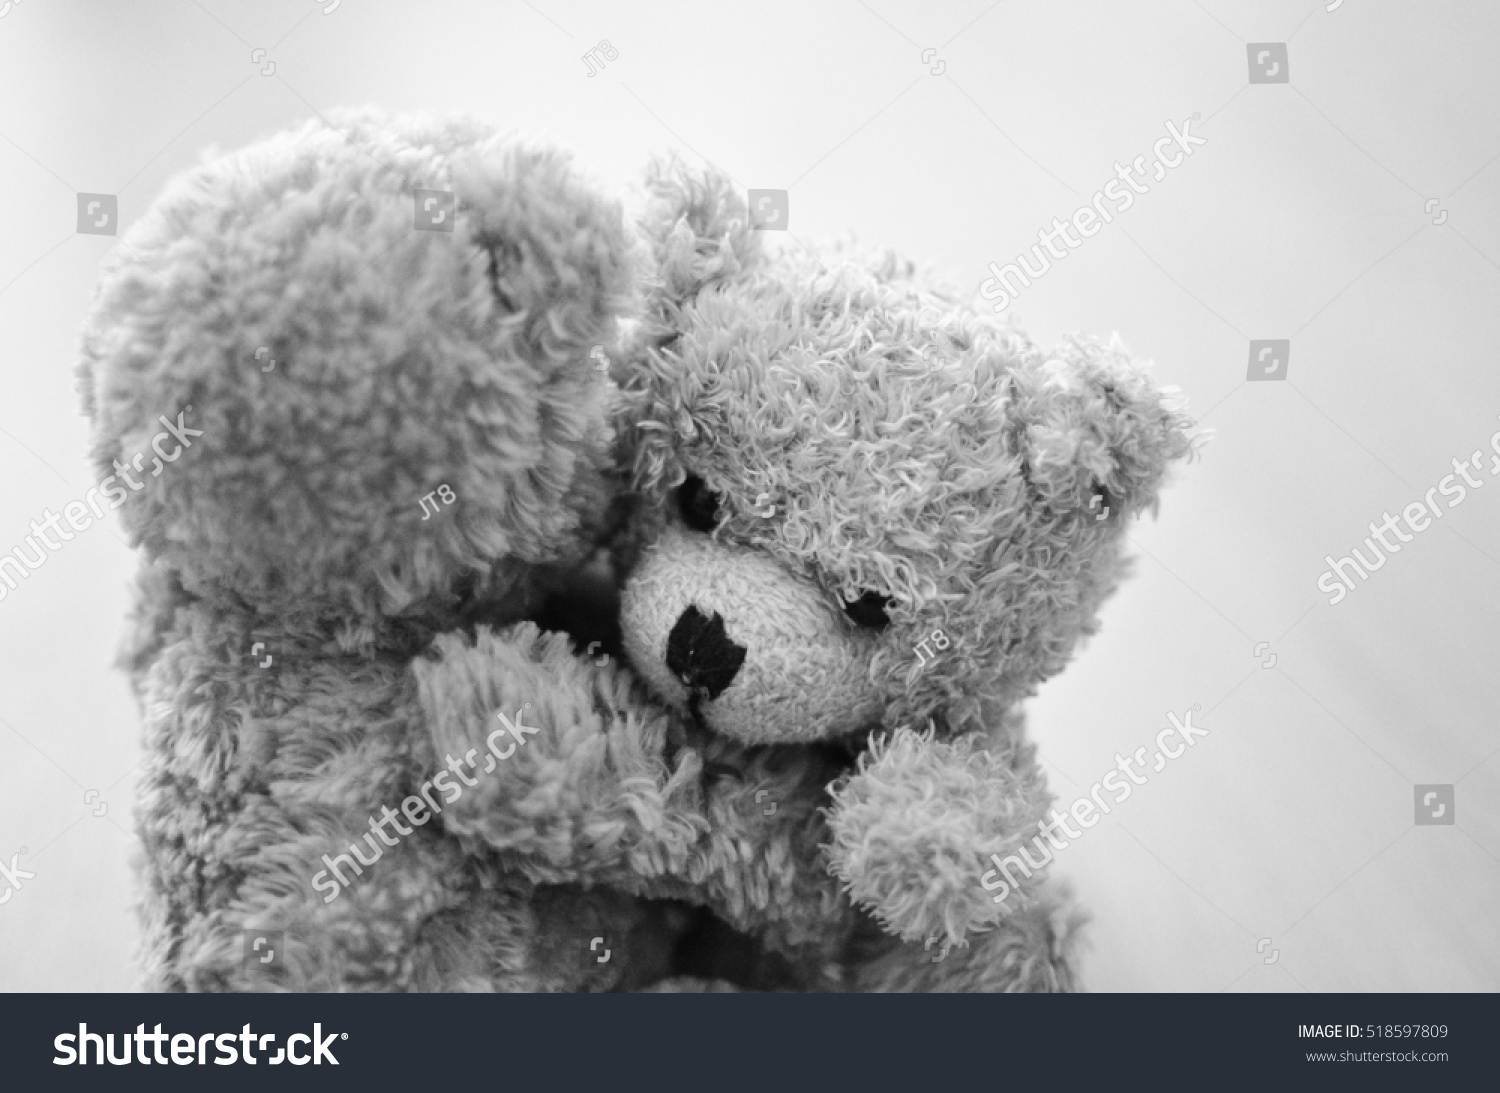 two teddy bears hugging